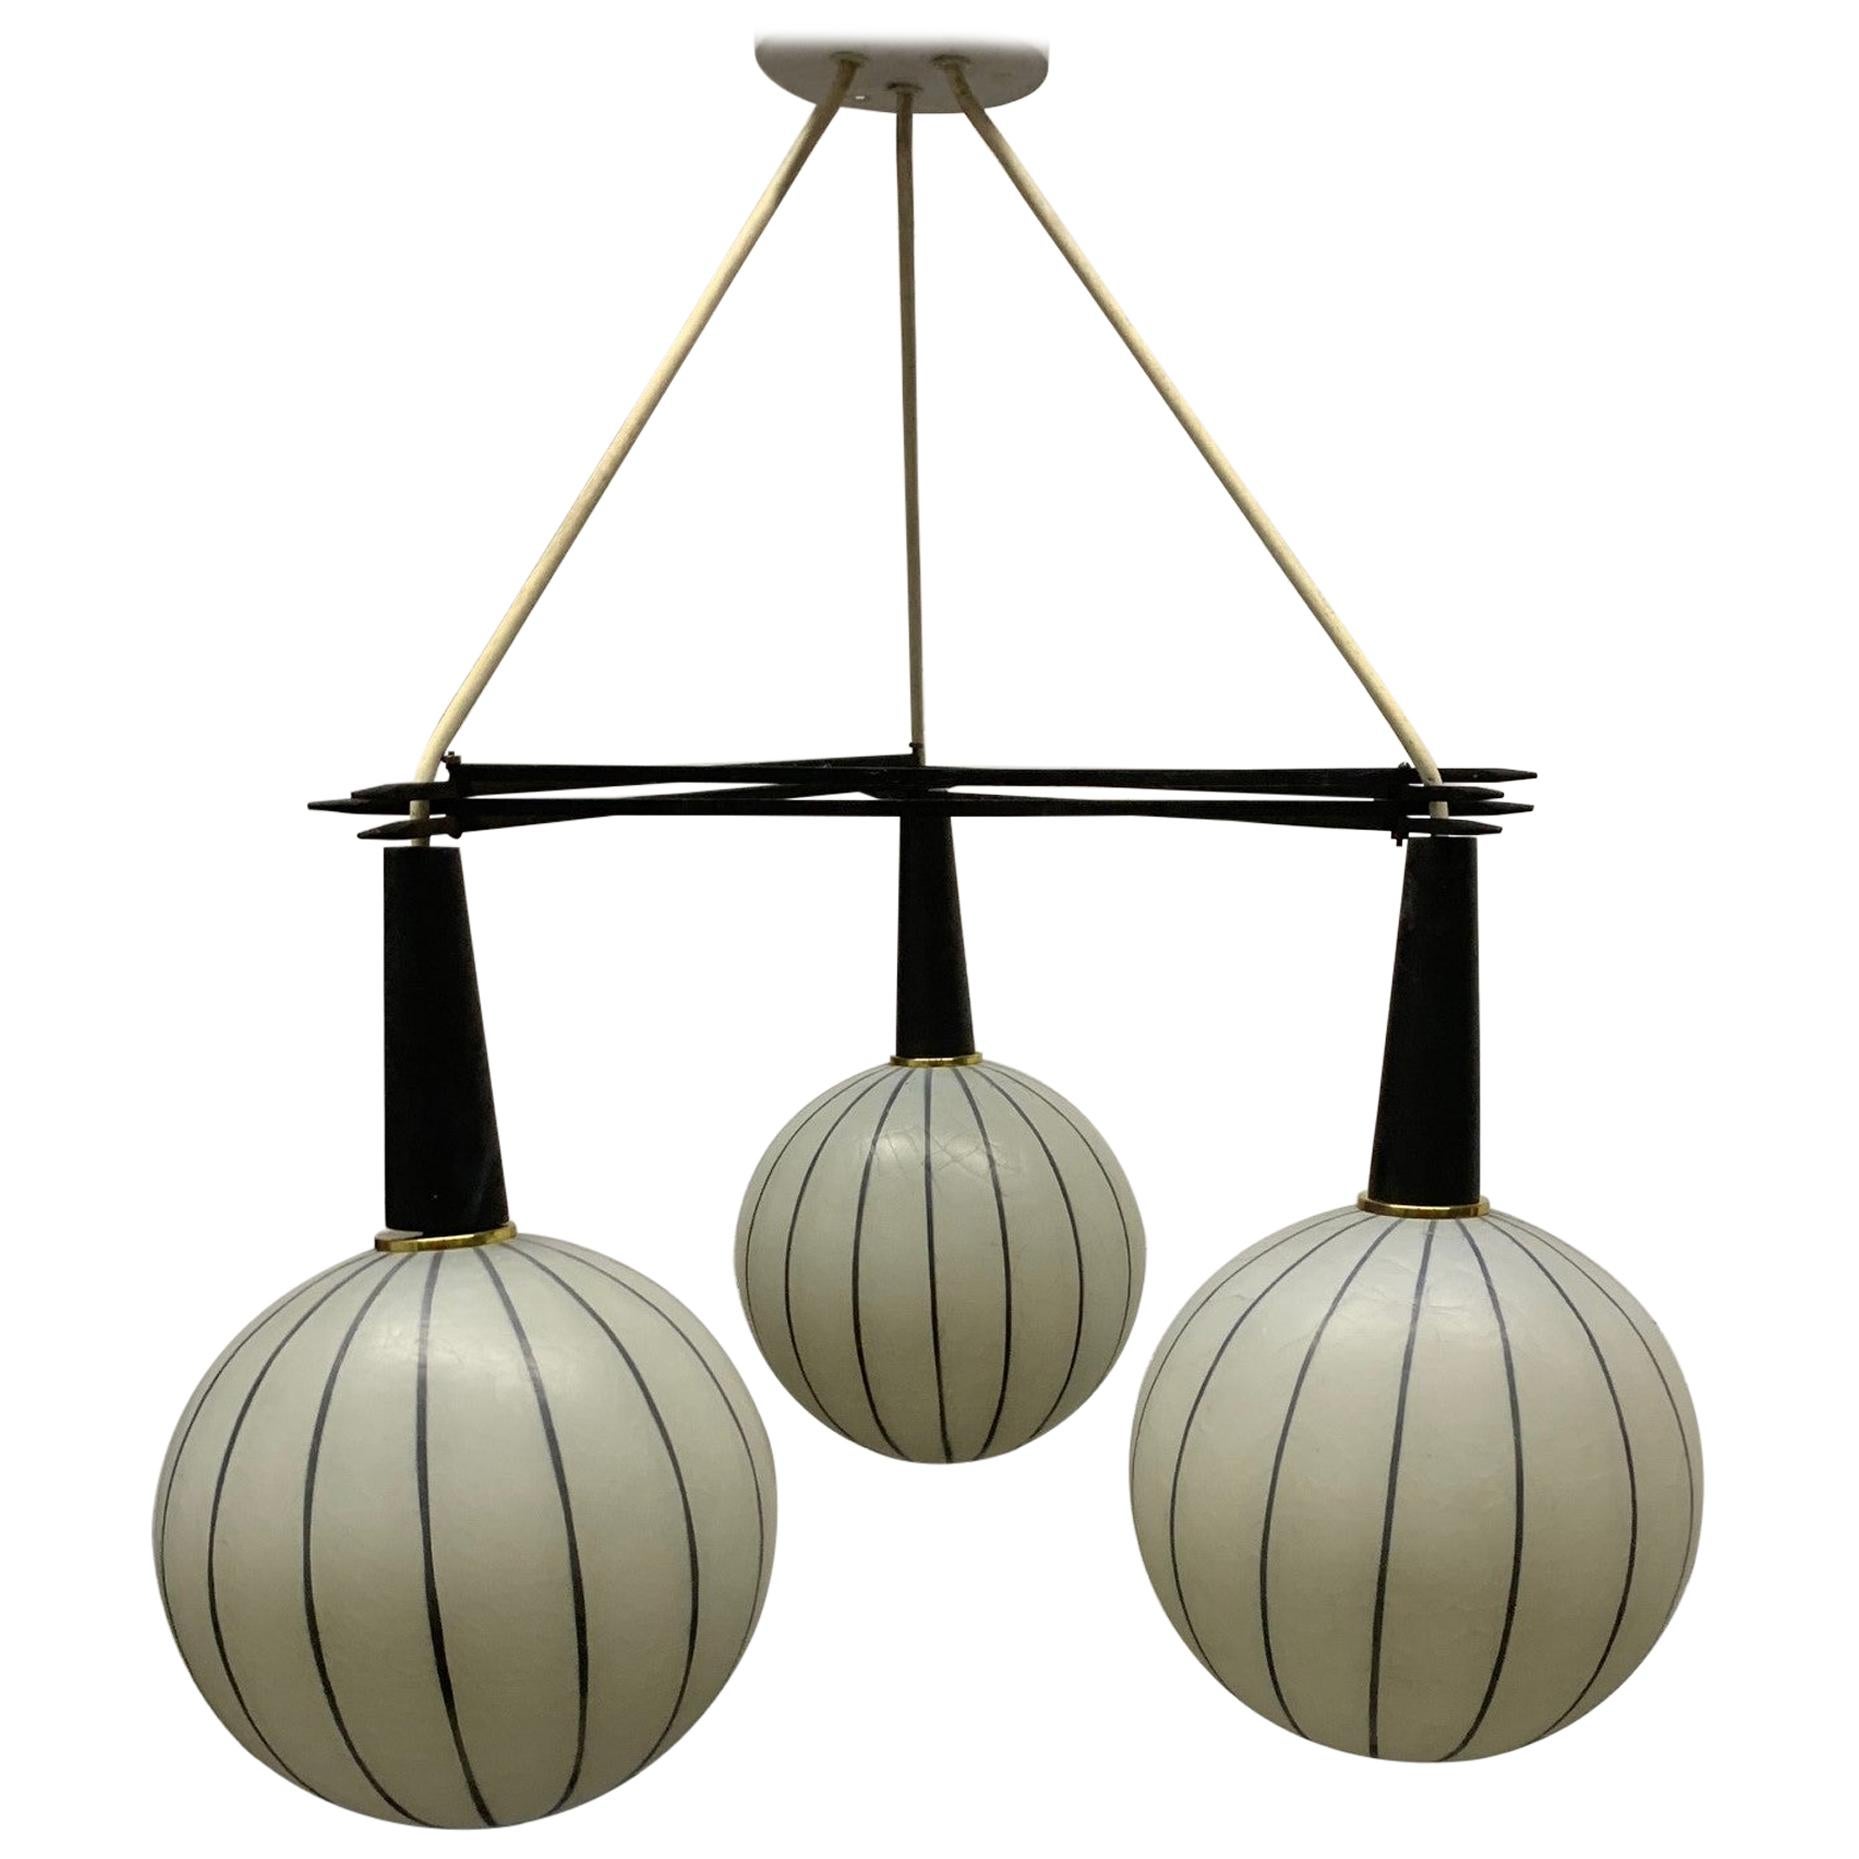 1960s Three-Globe Pendant Light Fixture